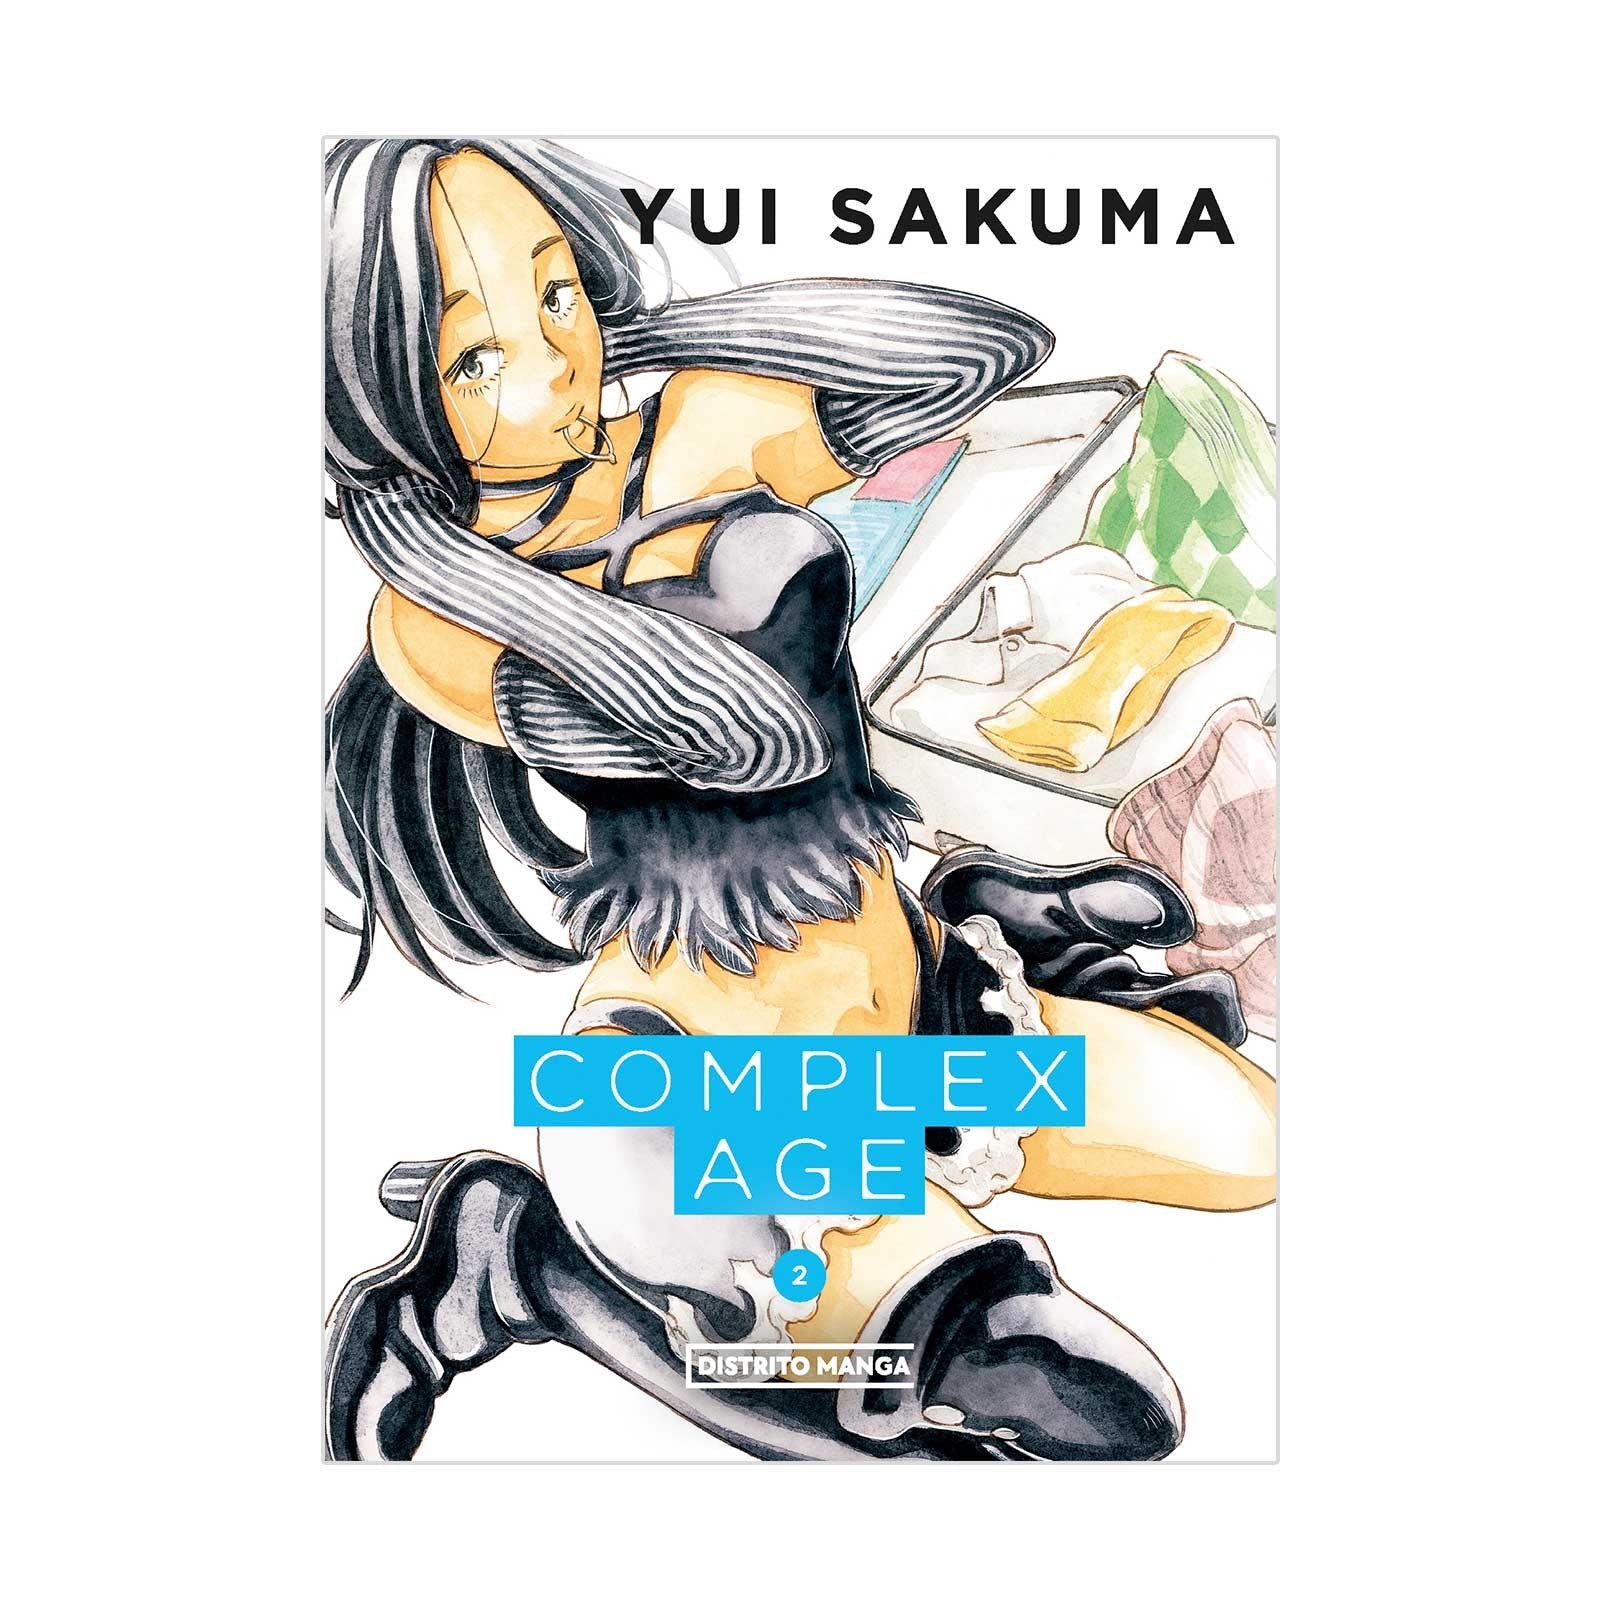 Complex Age | Yui Sakuma